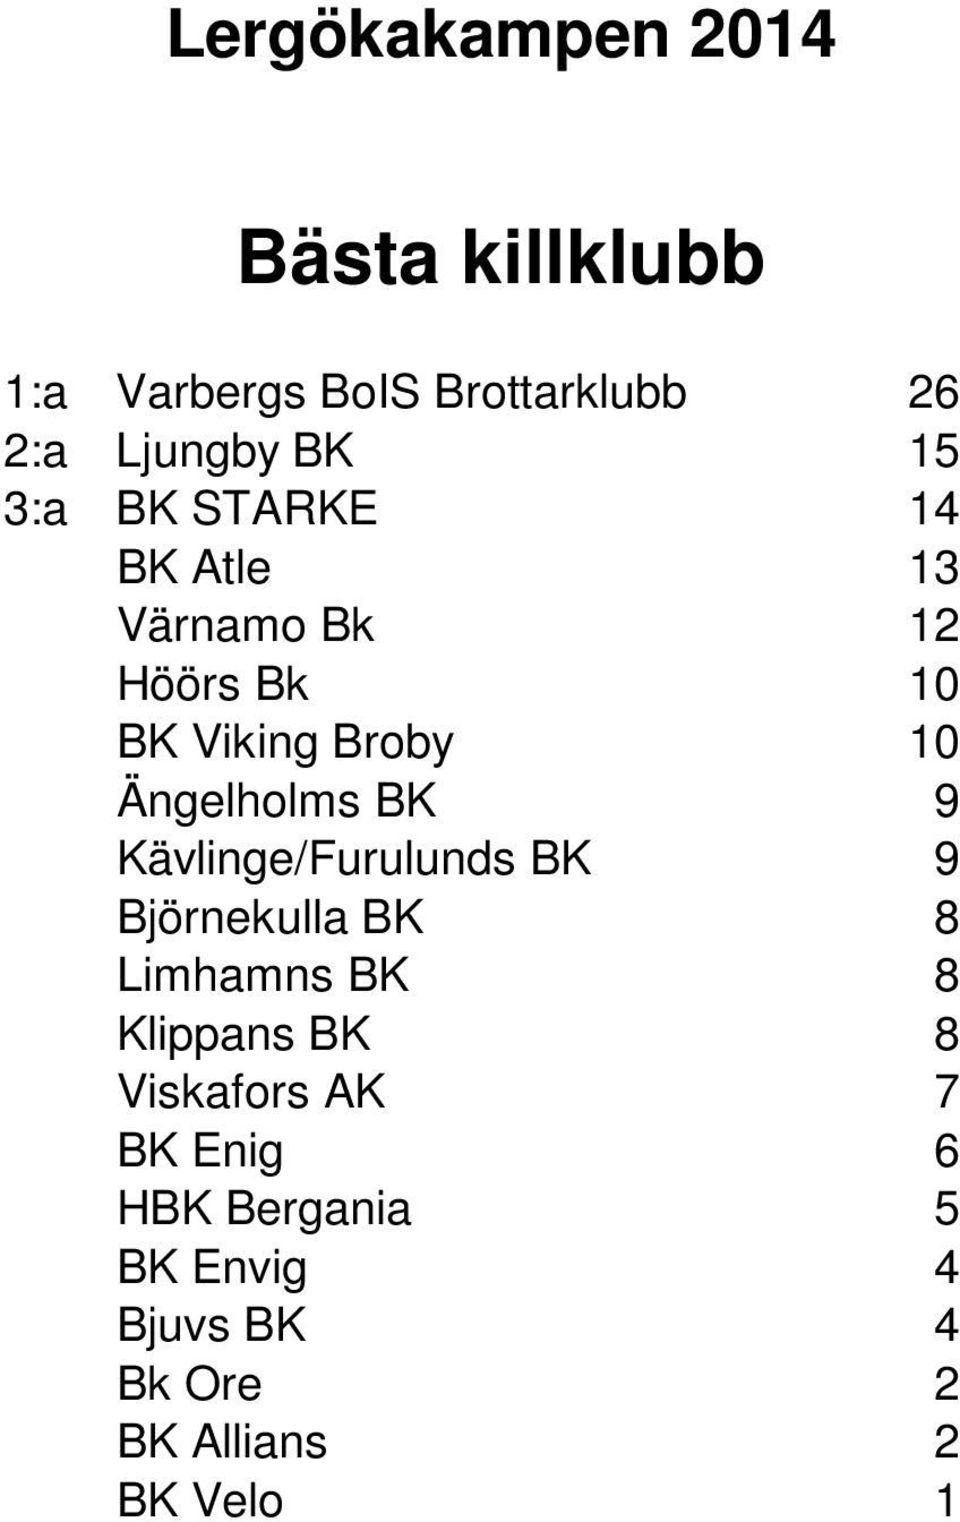 9 Kävlinge/Furulunds BK 9 Björnekulla BK 8 Limhamns BK 8 Klippans BK 8